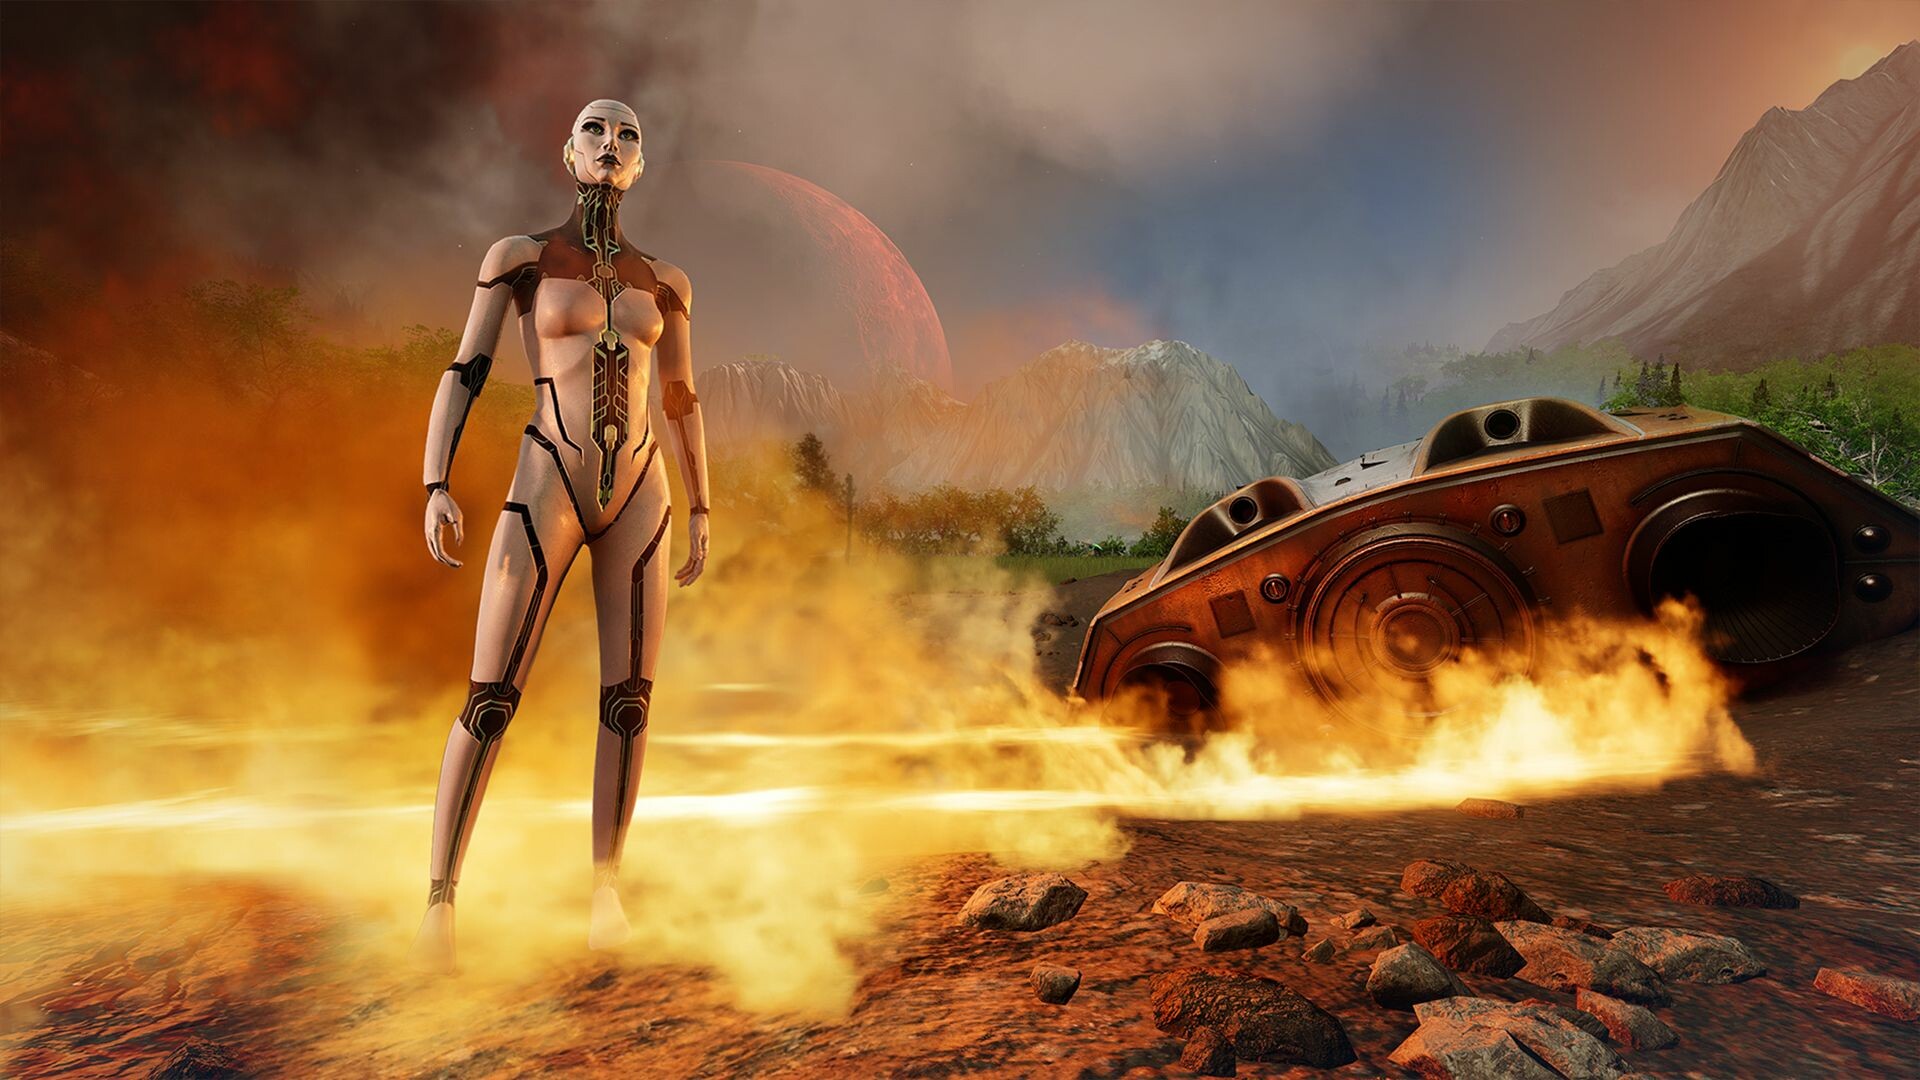 Stranded: Alien Dawn - Robots and Guardians DLC Steam CD Key 8.23 $